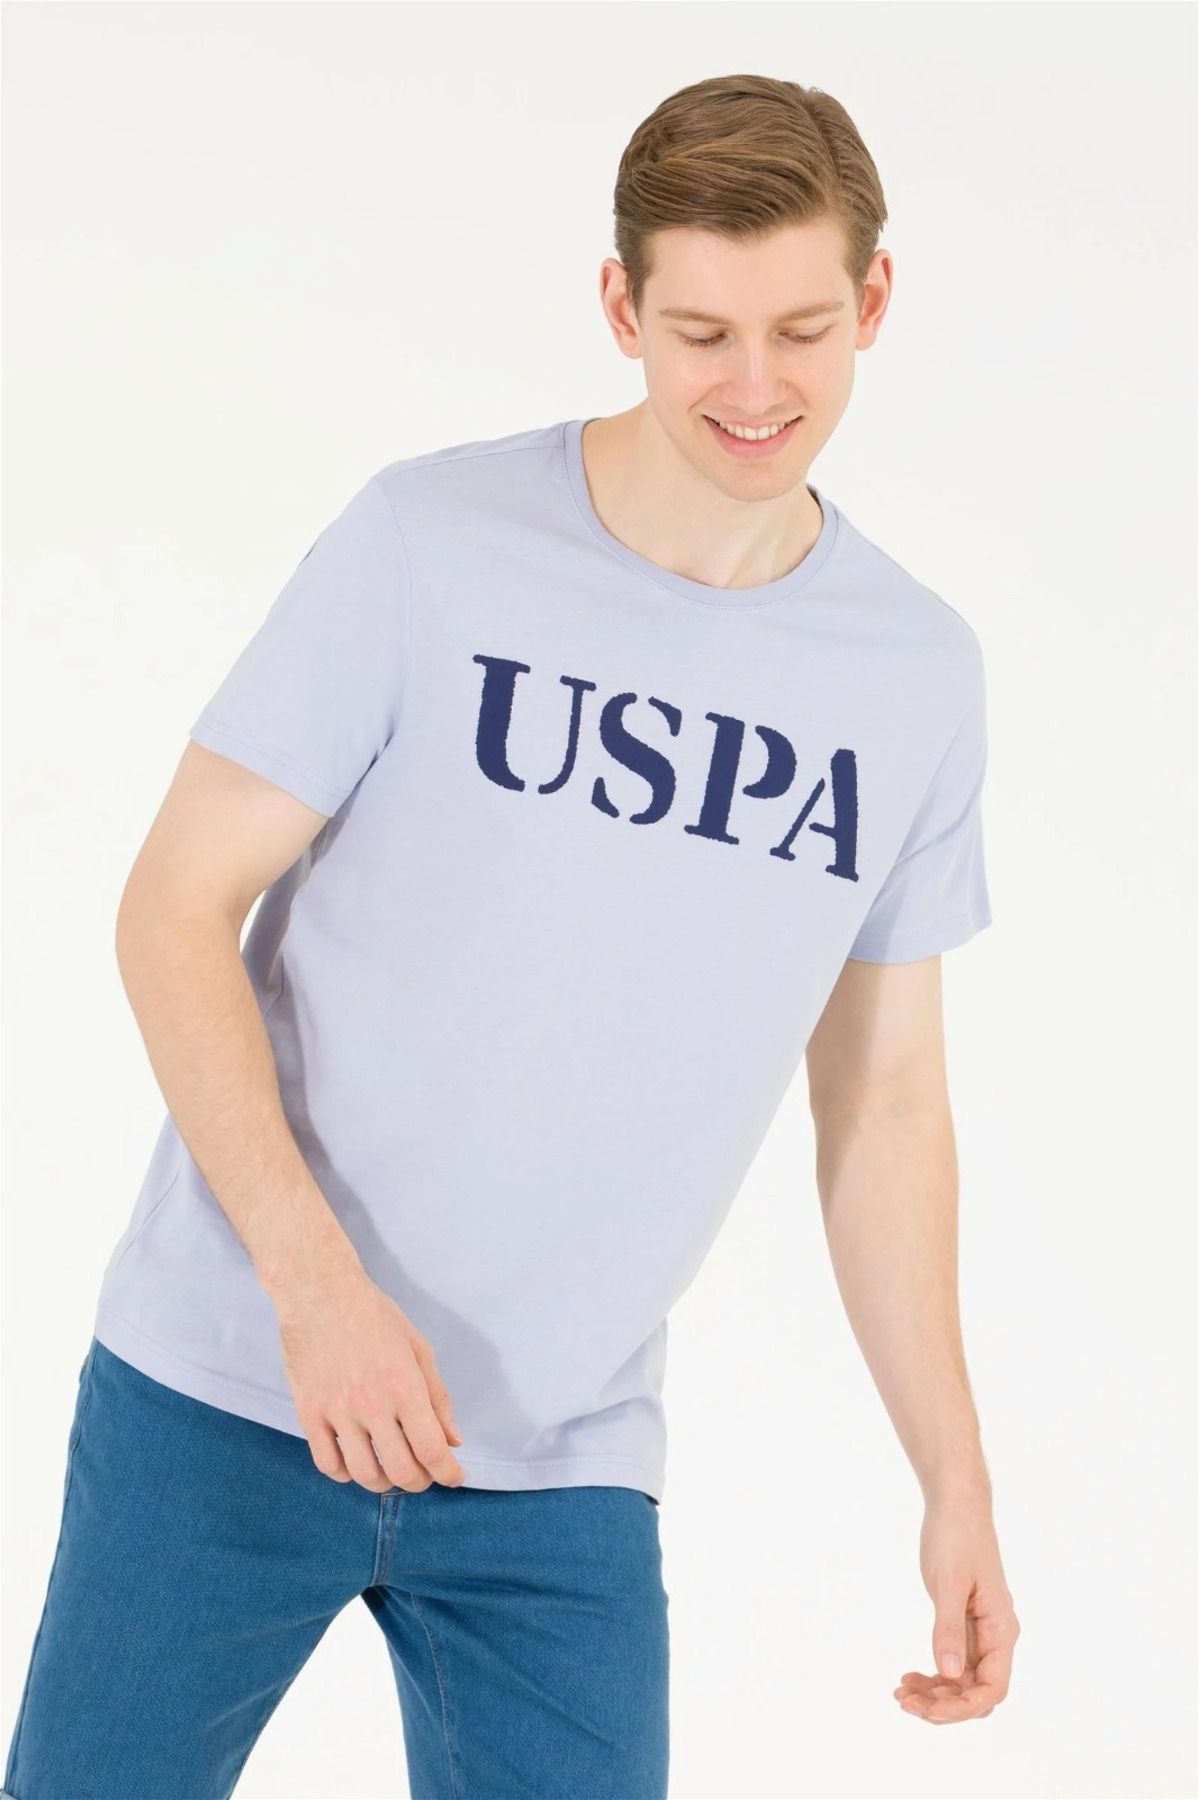 U.S. Polo Assn. Authentic USPA Graphic T-Shirt